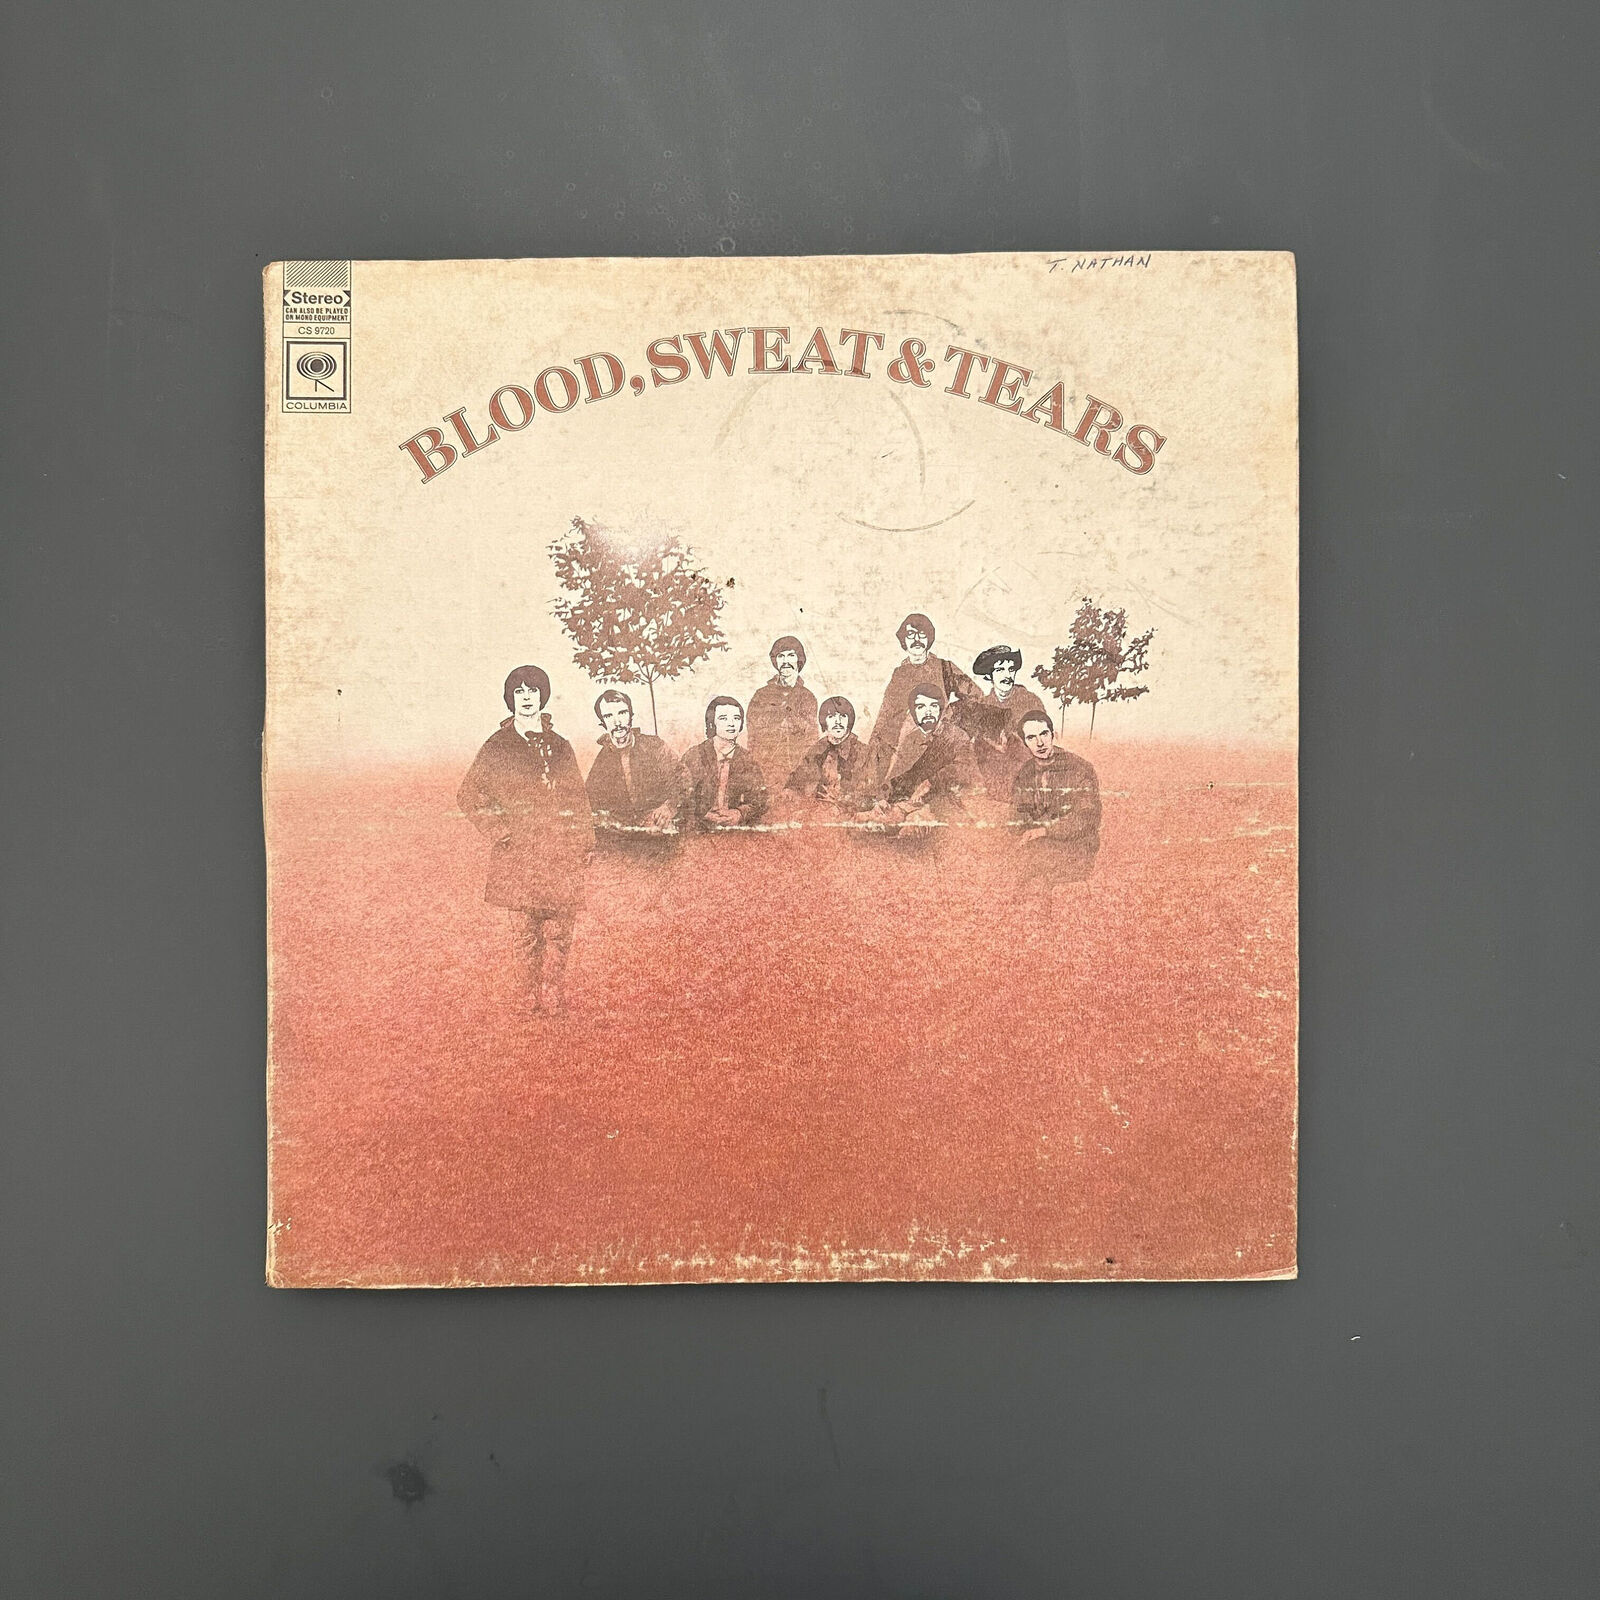 Blood, Sweat And Tears - Blood, Sweat And Tears - Vinyl LP Record - 1968